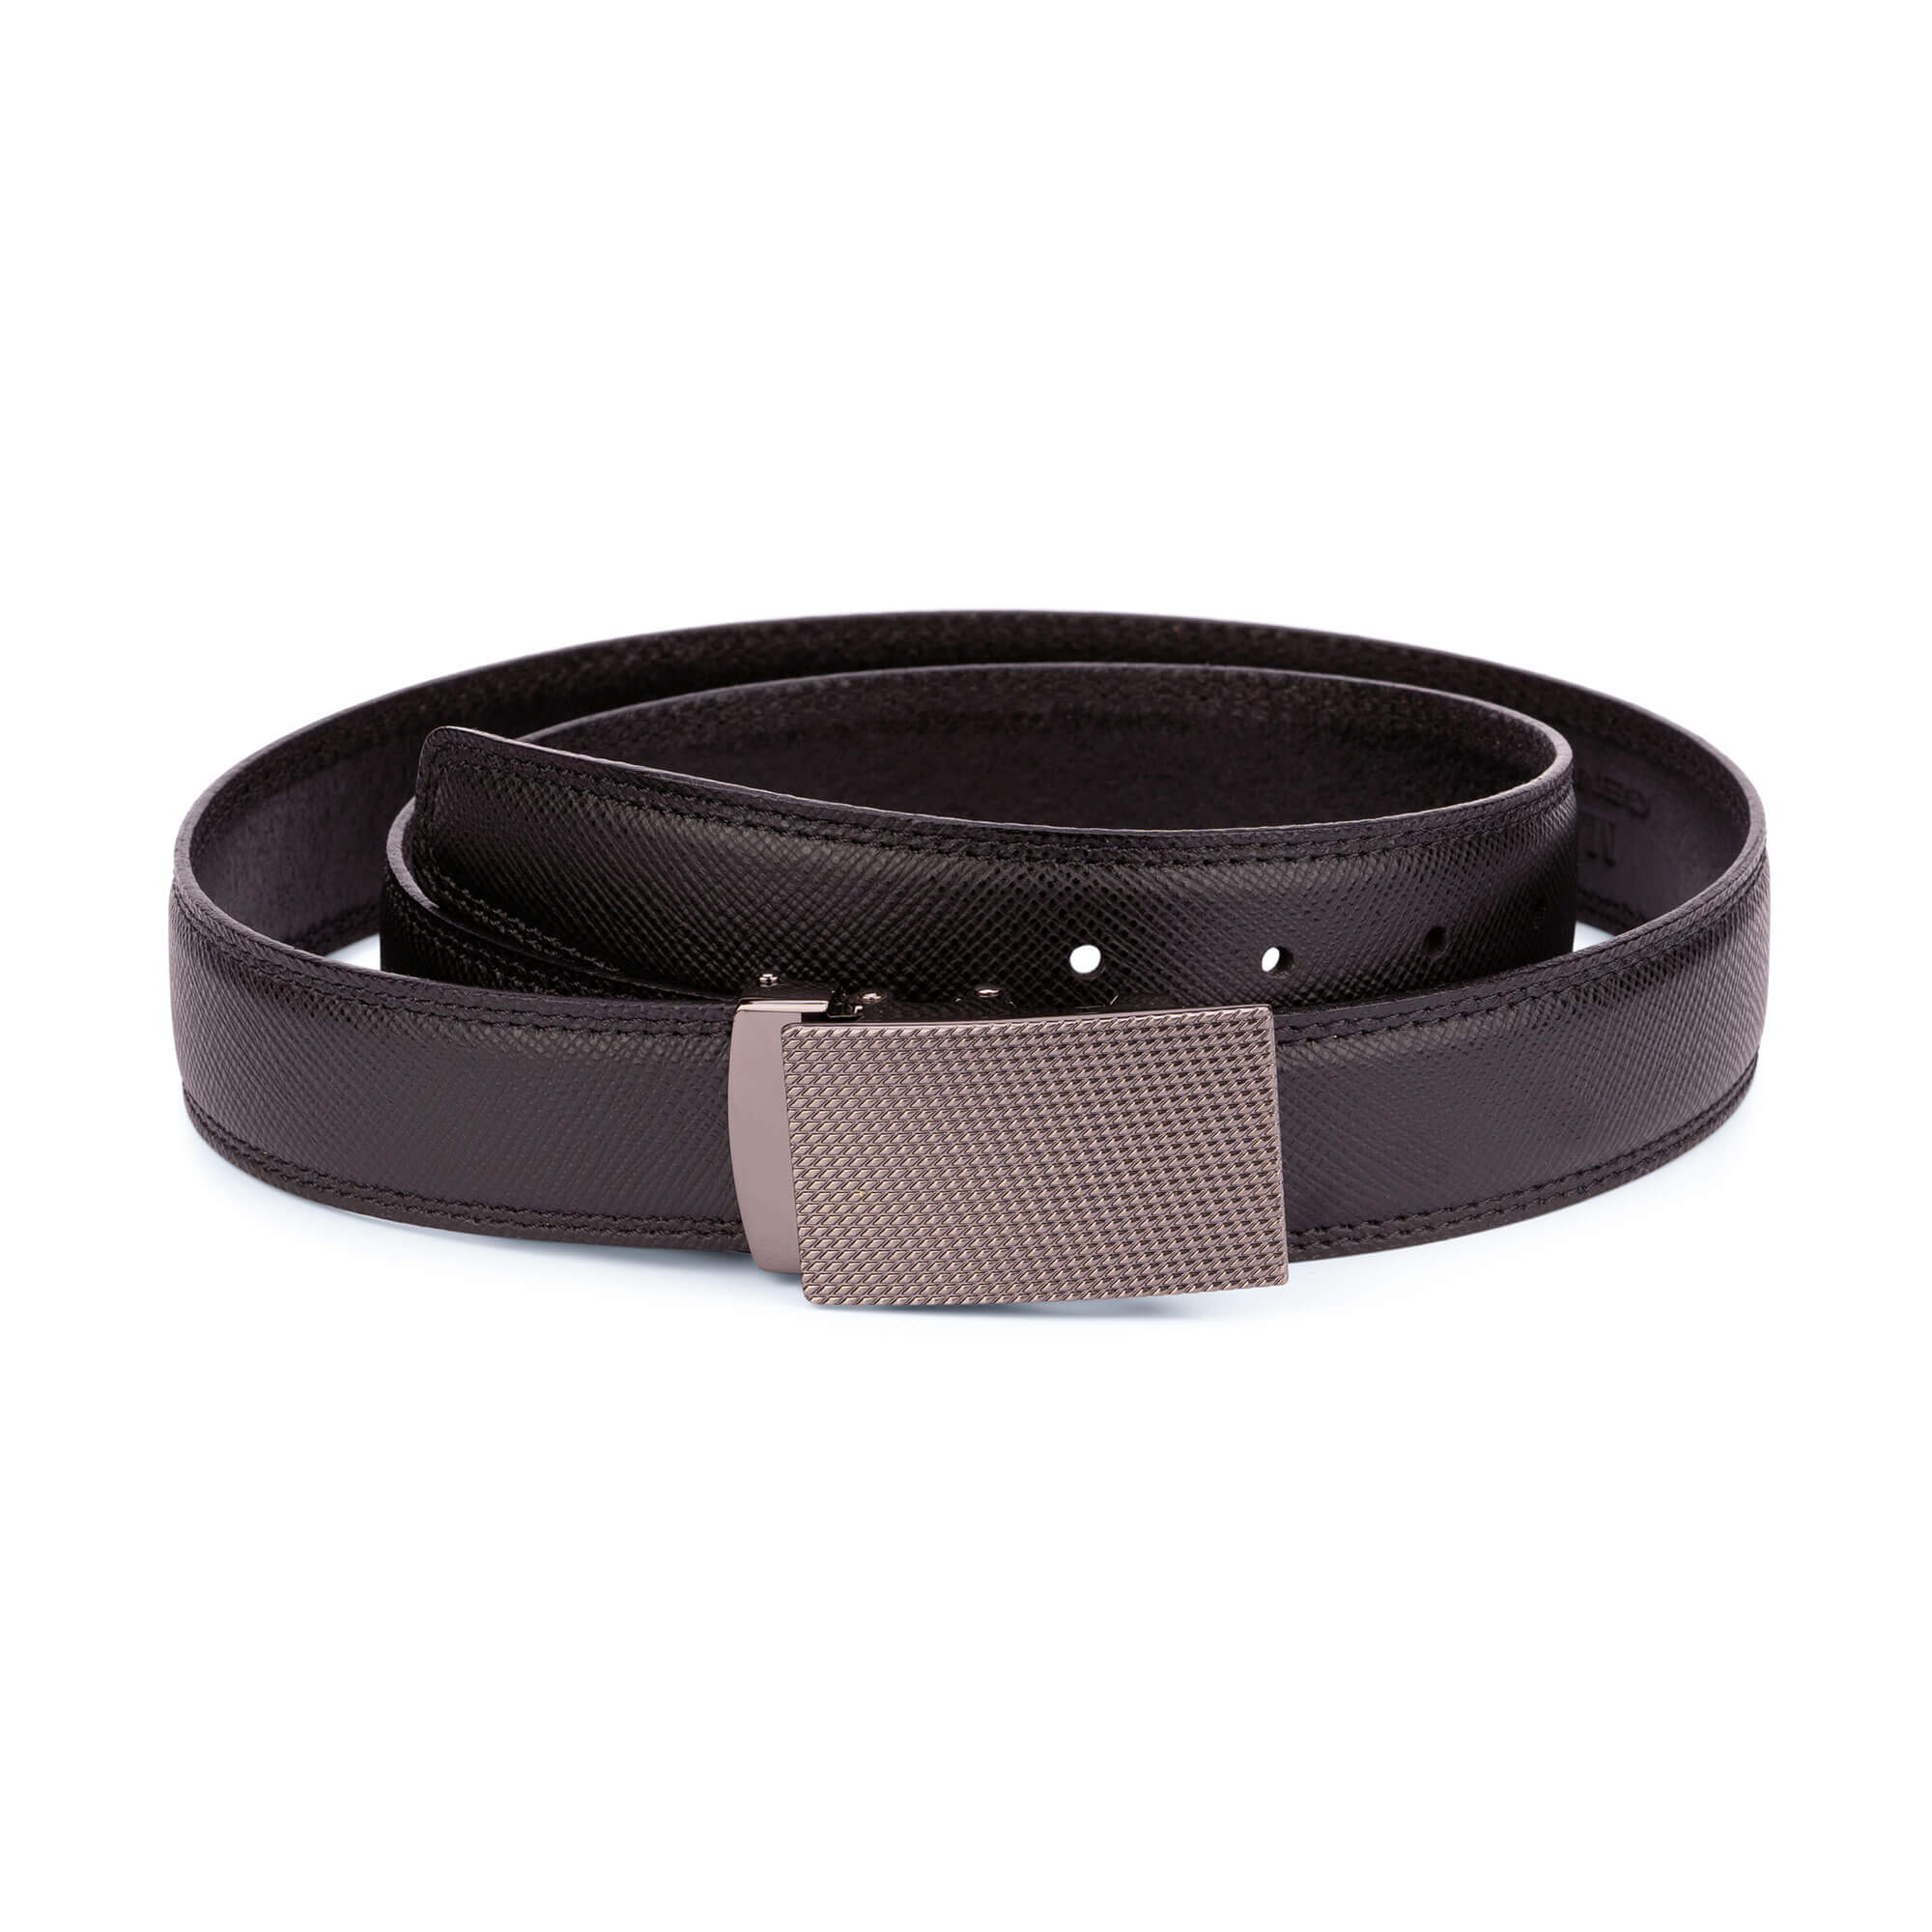 Buy Mens Black Saffiano Ratchet Strap Belt | LeatherBeltsOnline.com